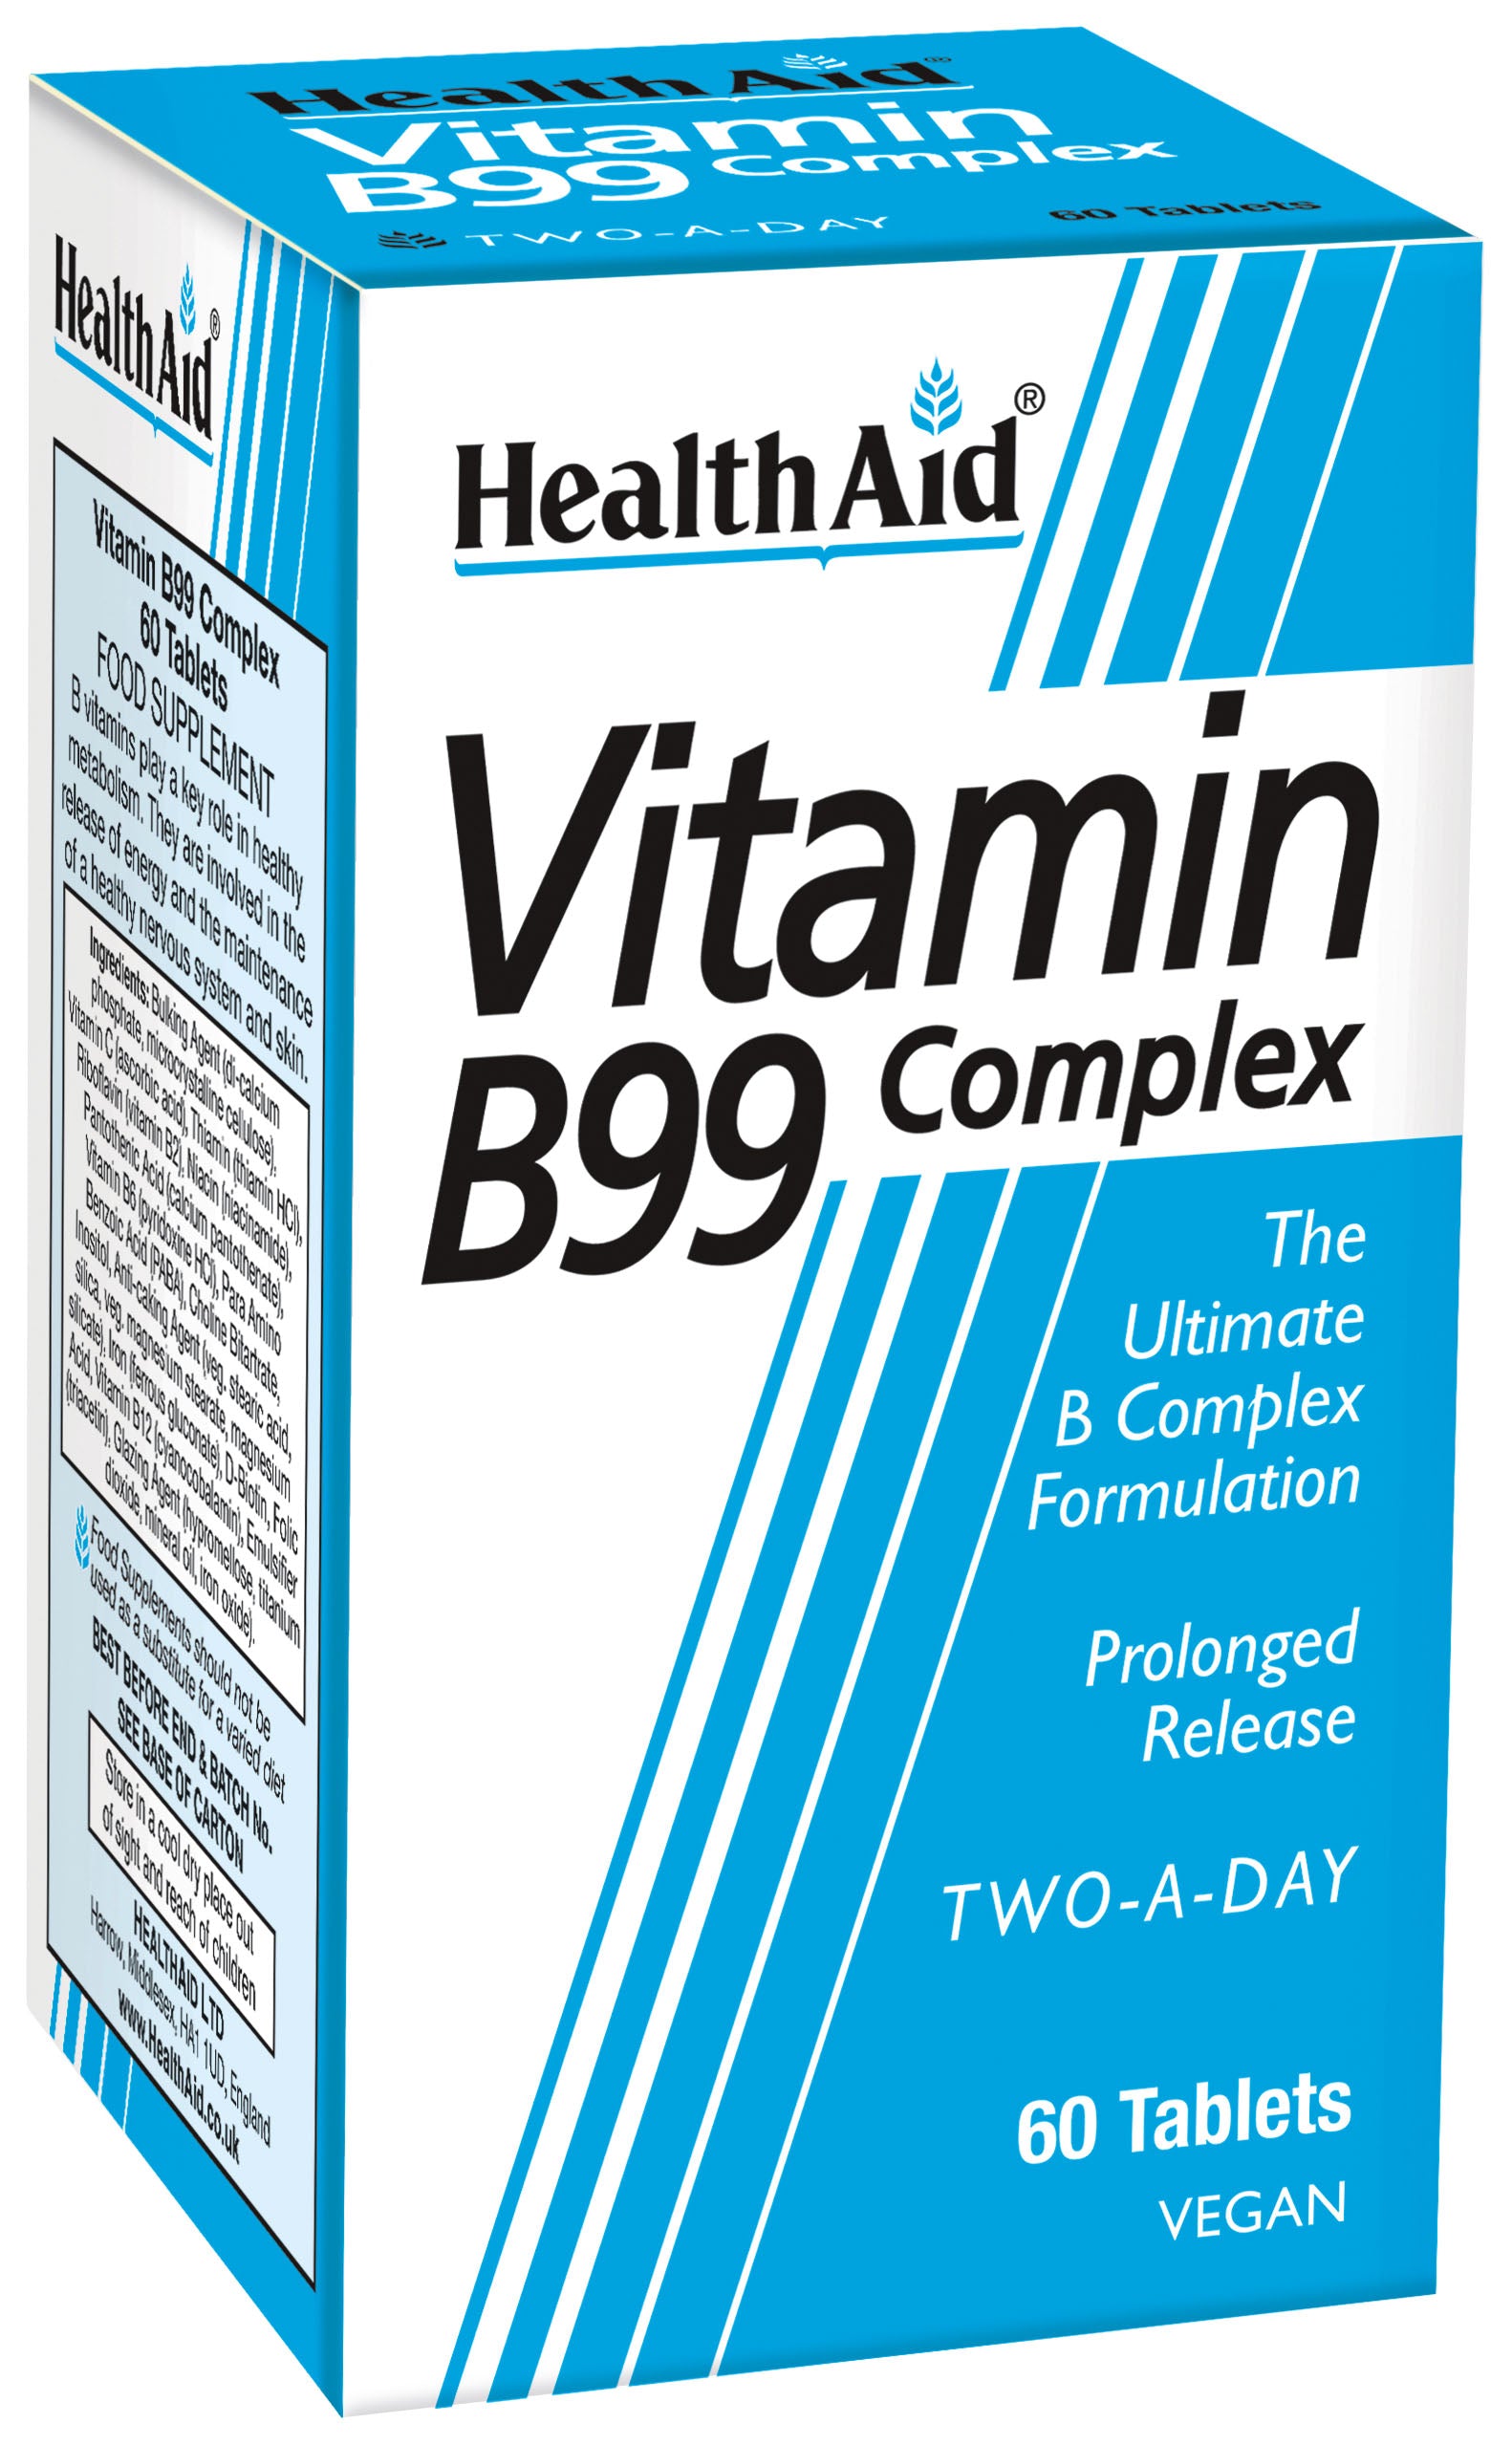 Health Aid Vegan Vitamin B99 Complex 60's